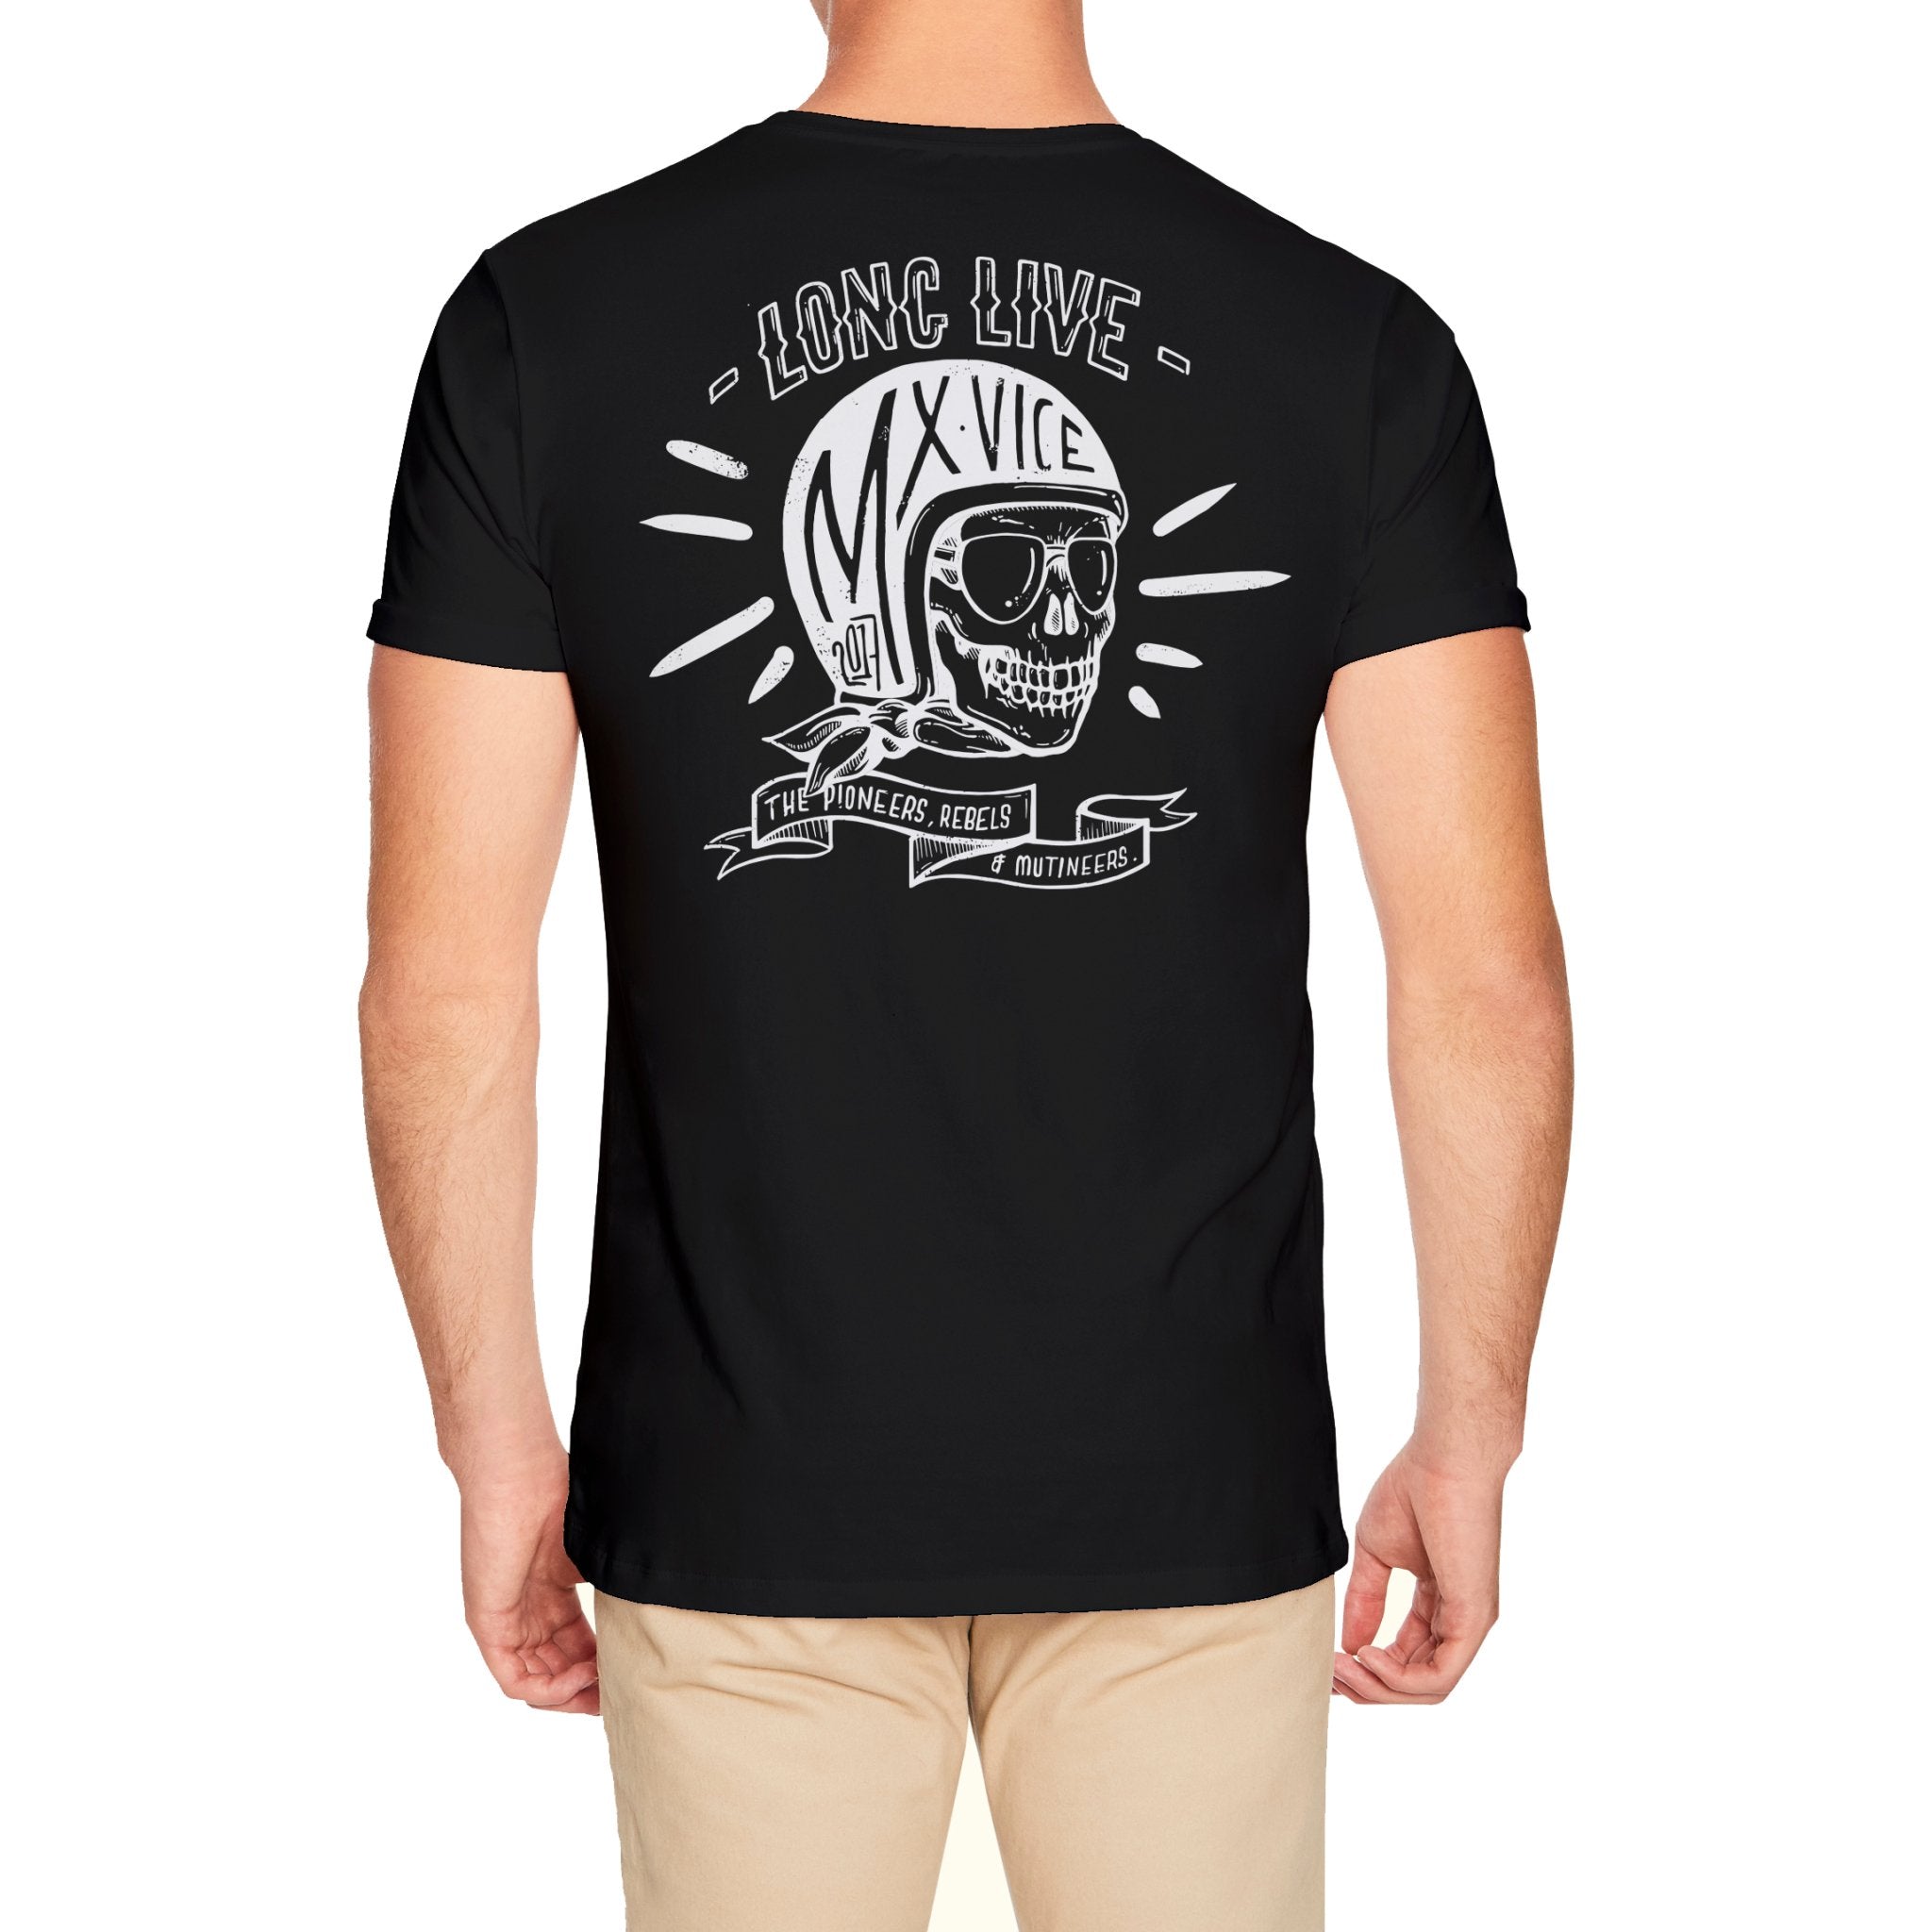 MX Vice - Independence T- Shirt - Black